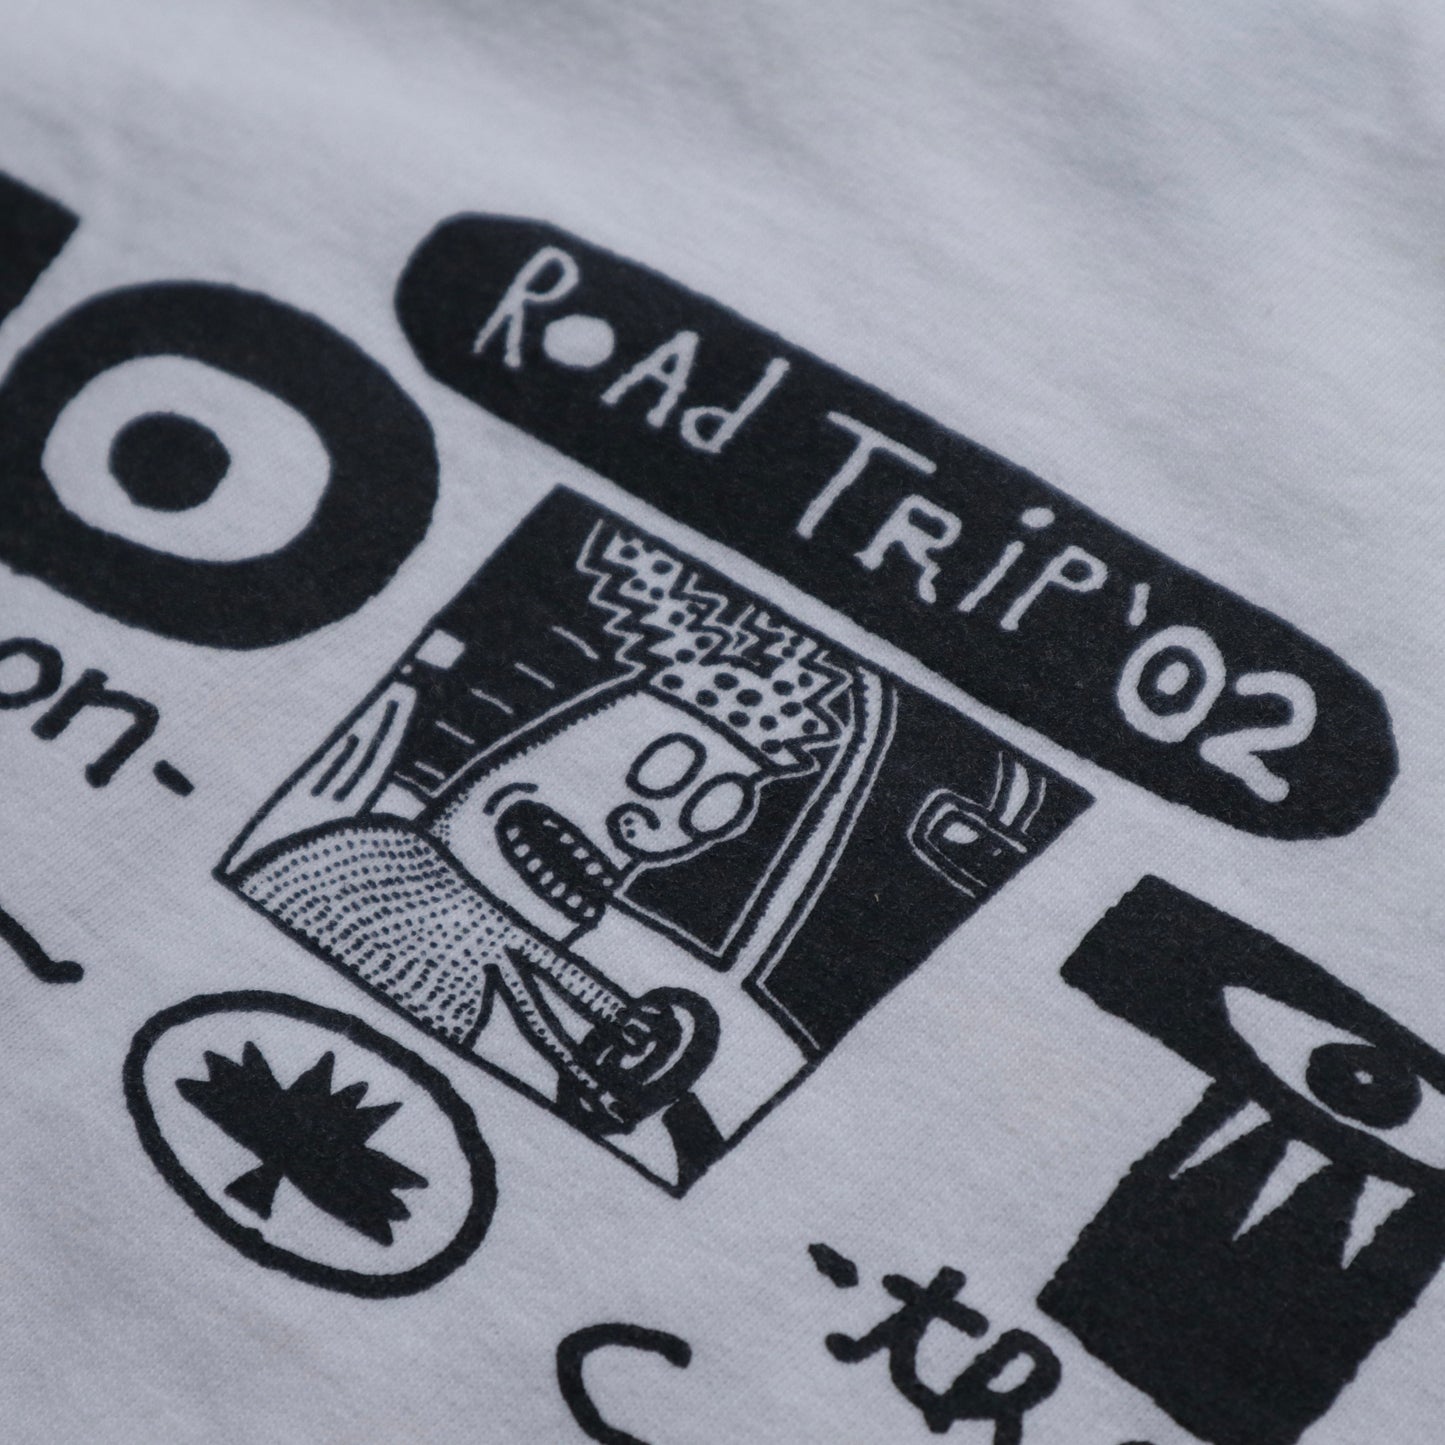 2002 Road Trip print tee 古著T-Shirt